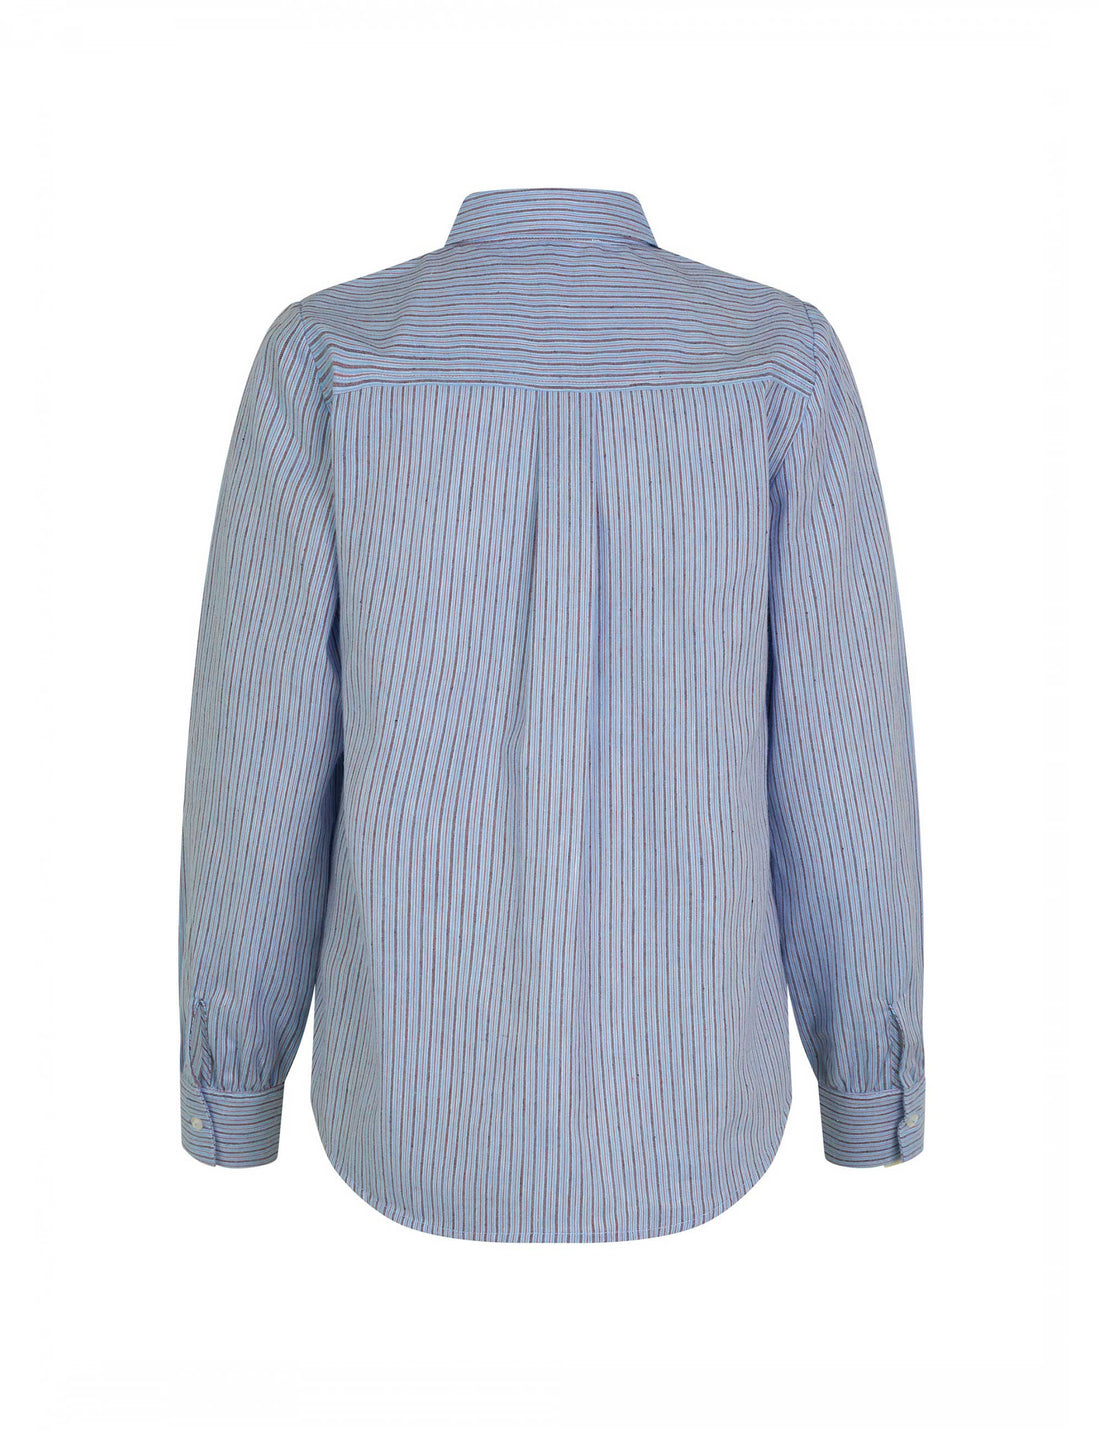 Marinella shirt light blue/burgundy/red stripe